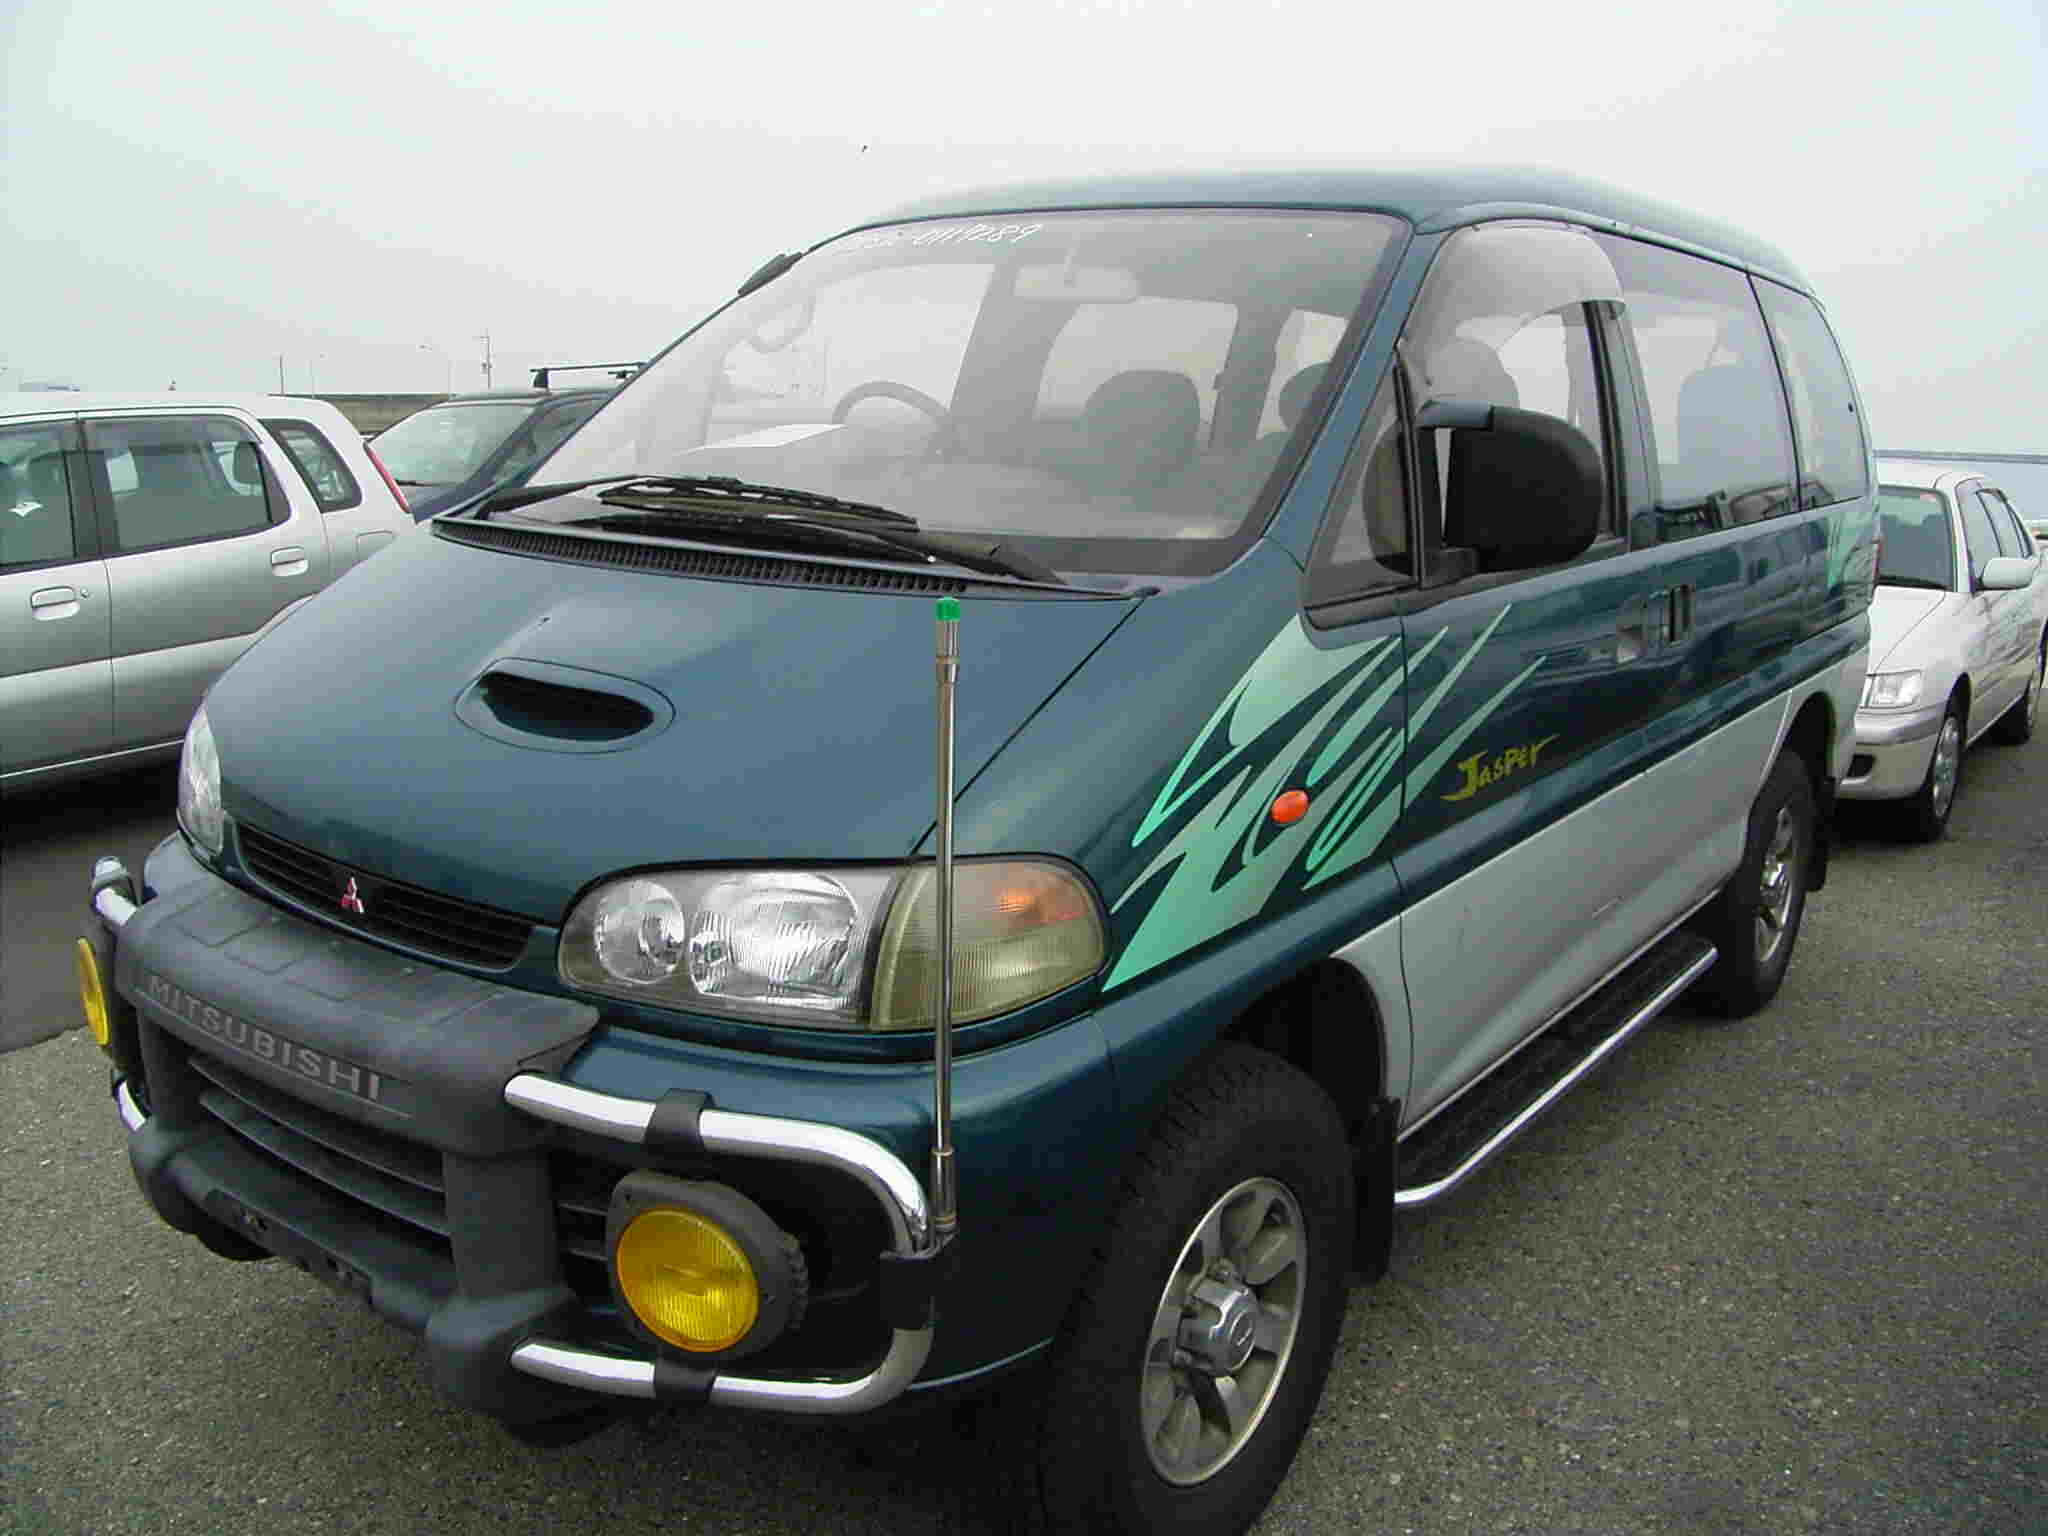 1996 Mitsubishi Delica Images